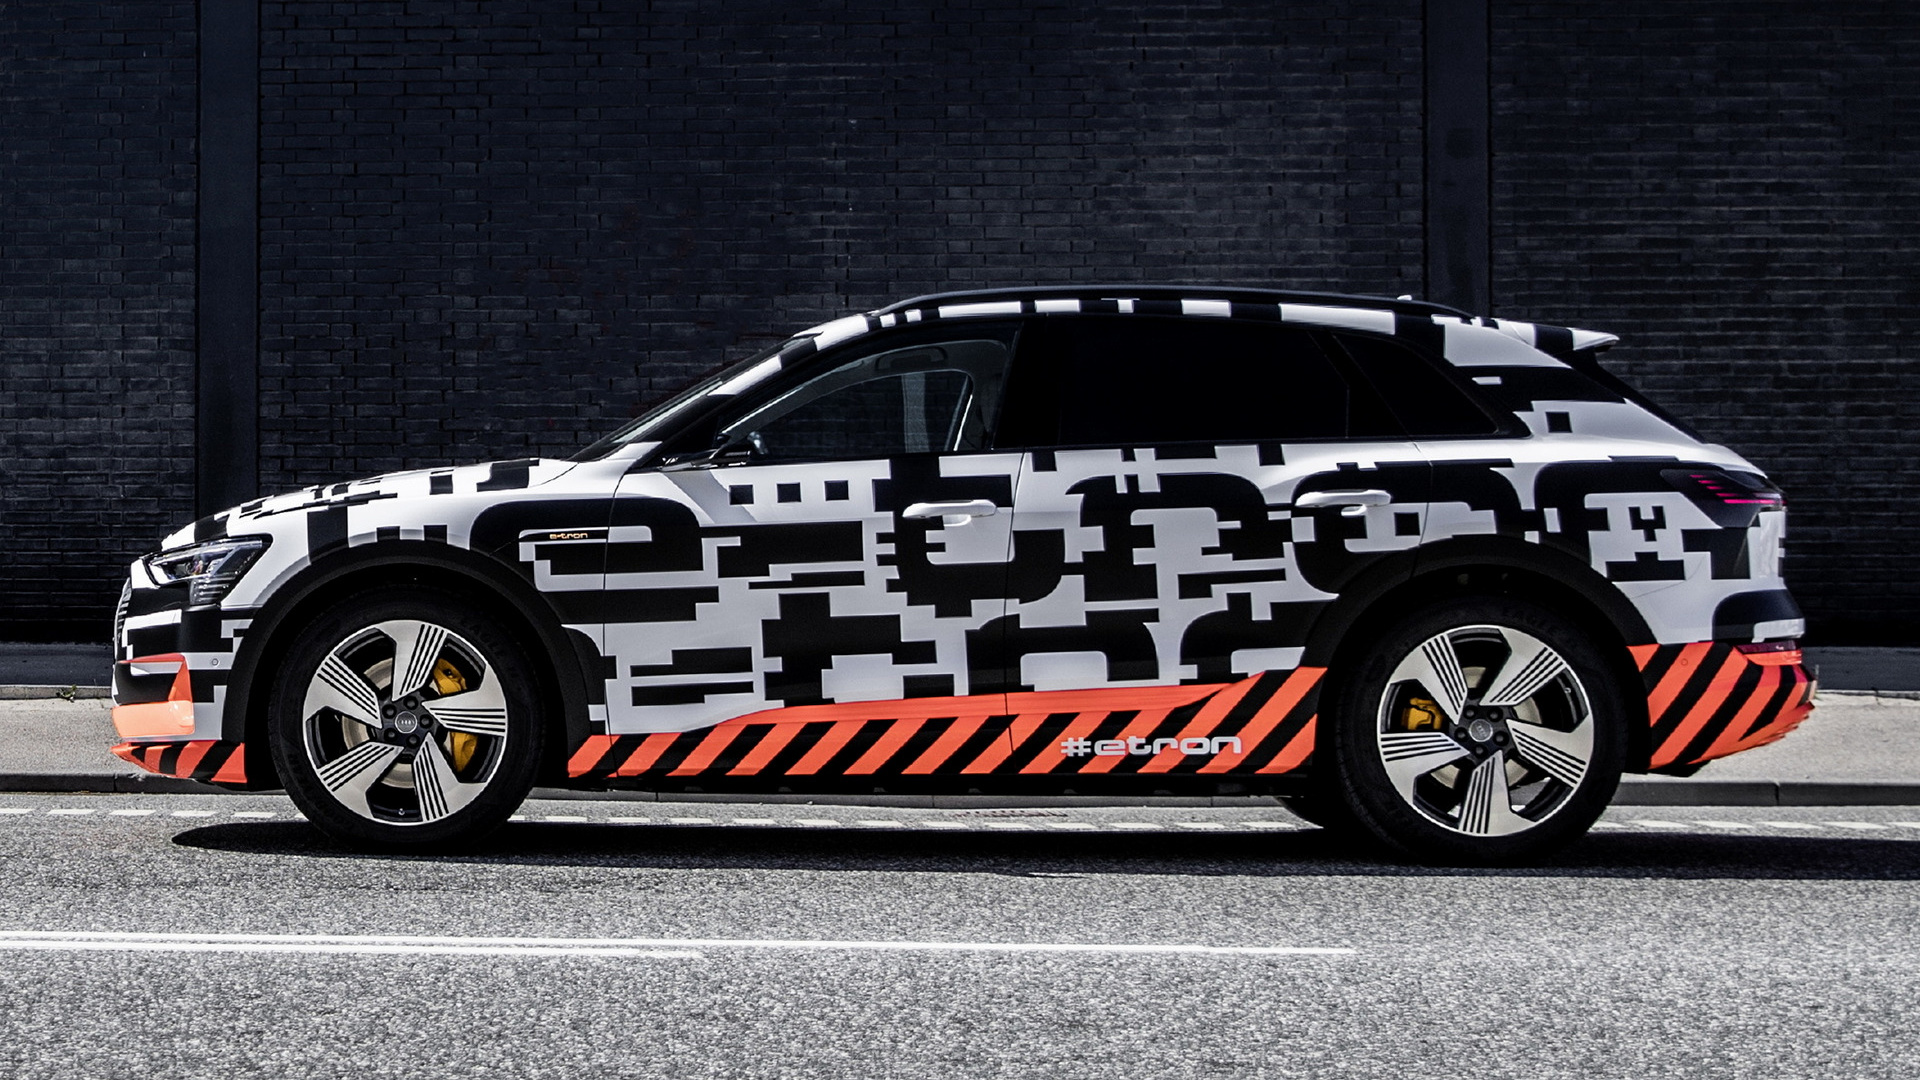 Vehicles Audi E-Tron Prototype HD Wallpaper | Background Image